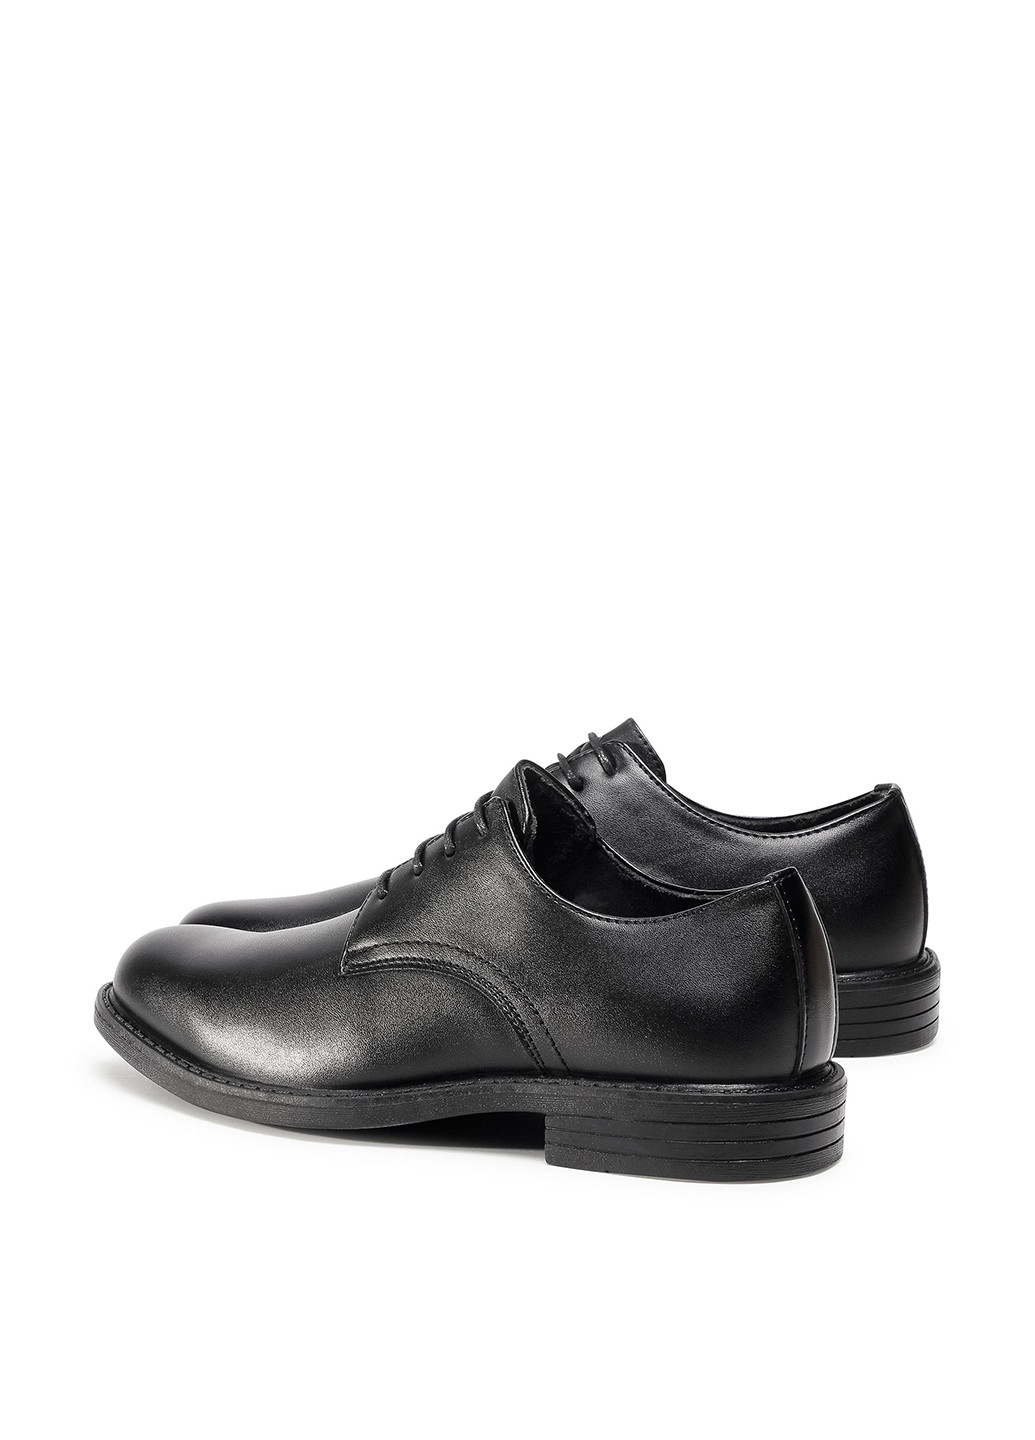 Черные туфли bf1986-1 со шнурками Ottimo